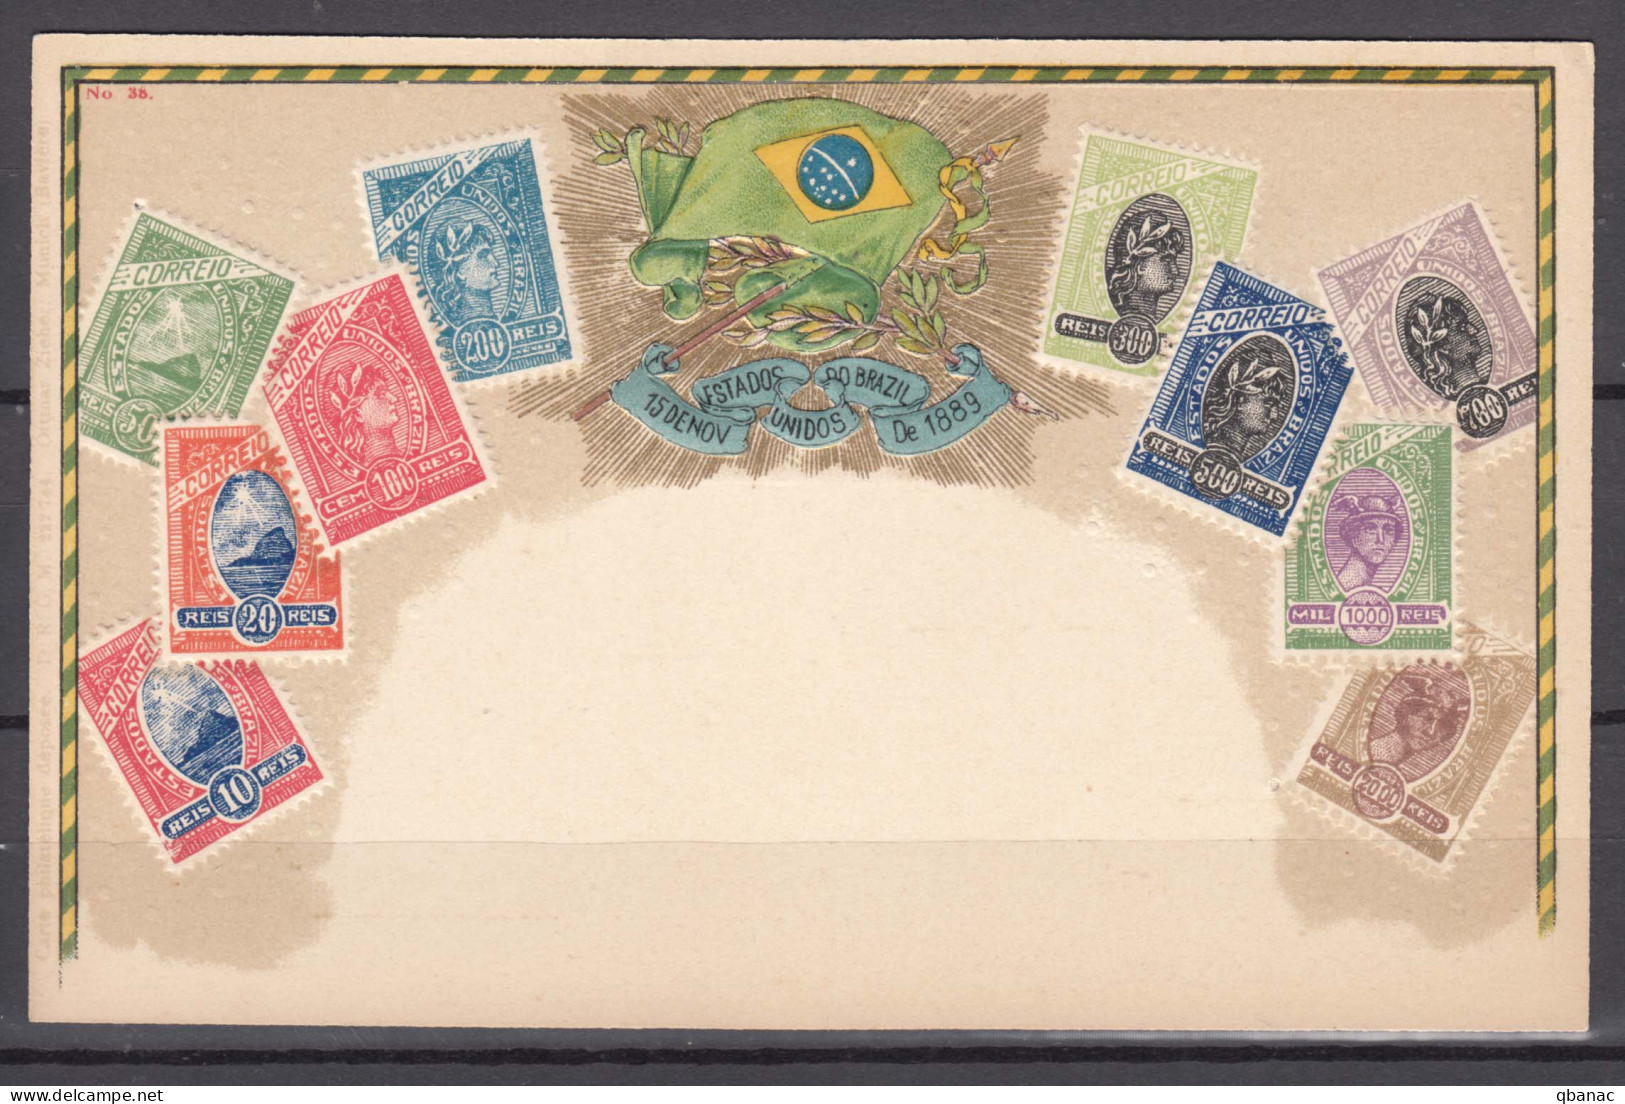 Brasil Brazil Postal Card In Nice Mint Condition - Postal Stationery